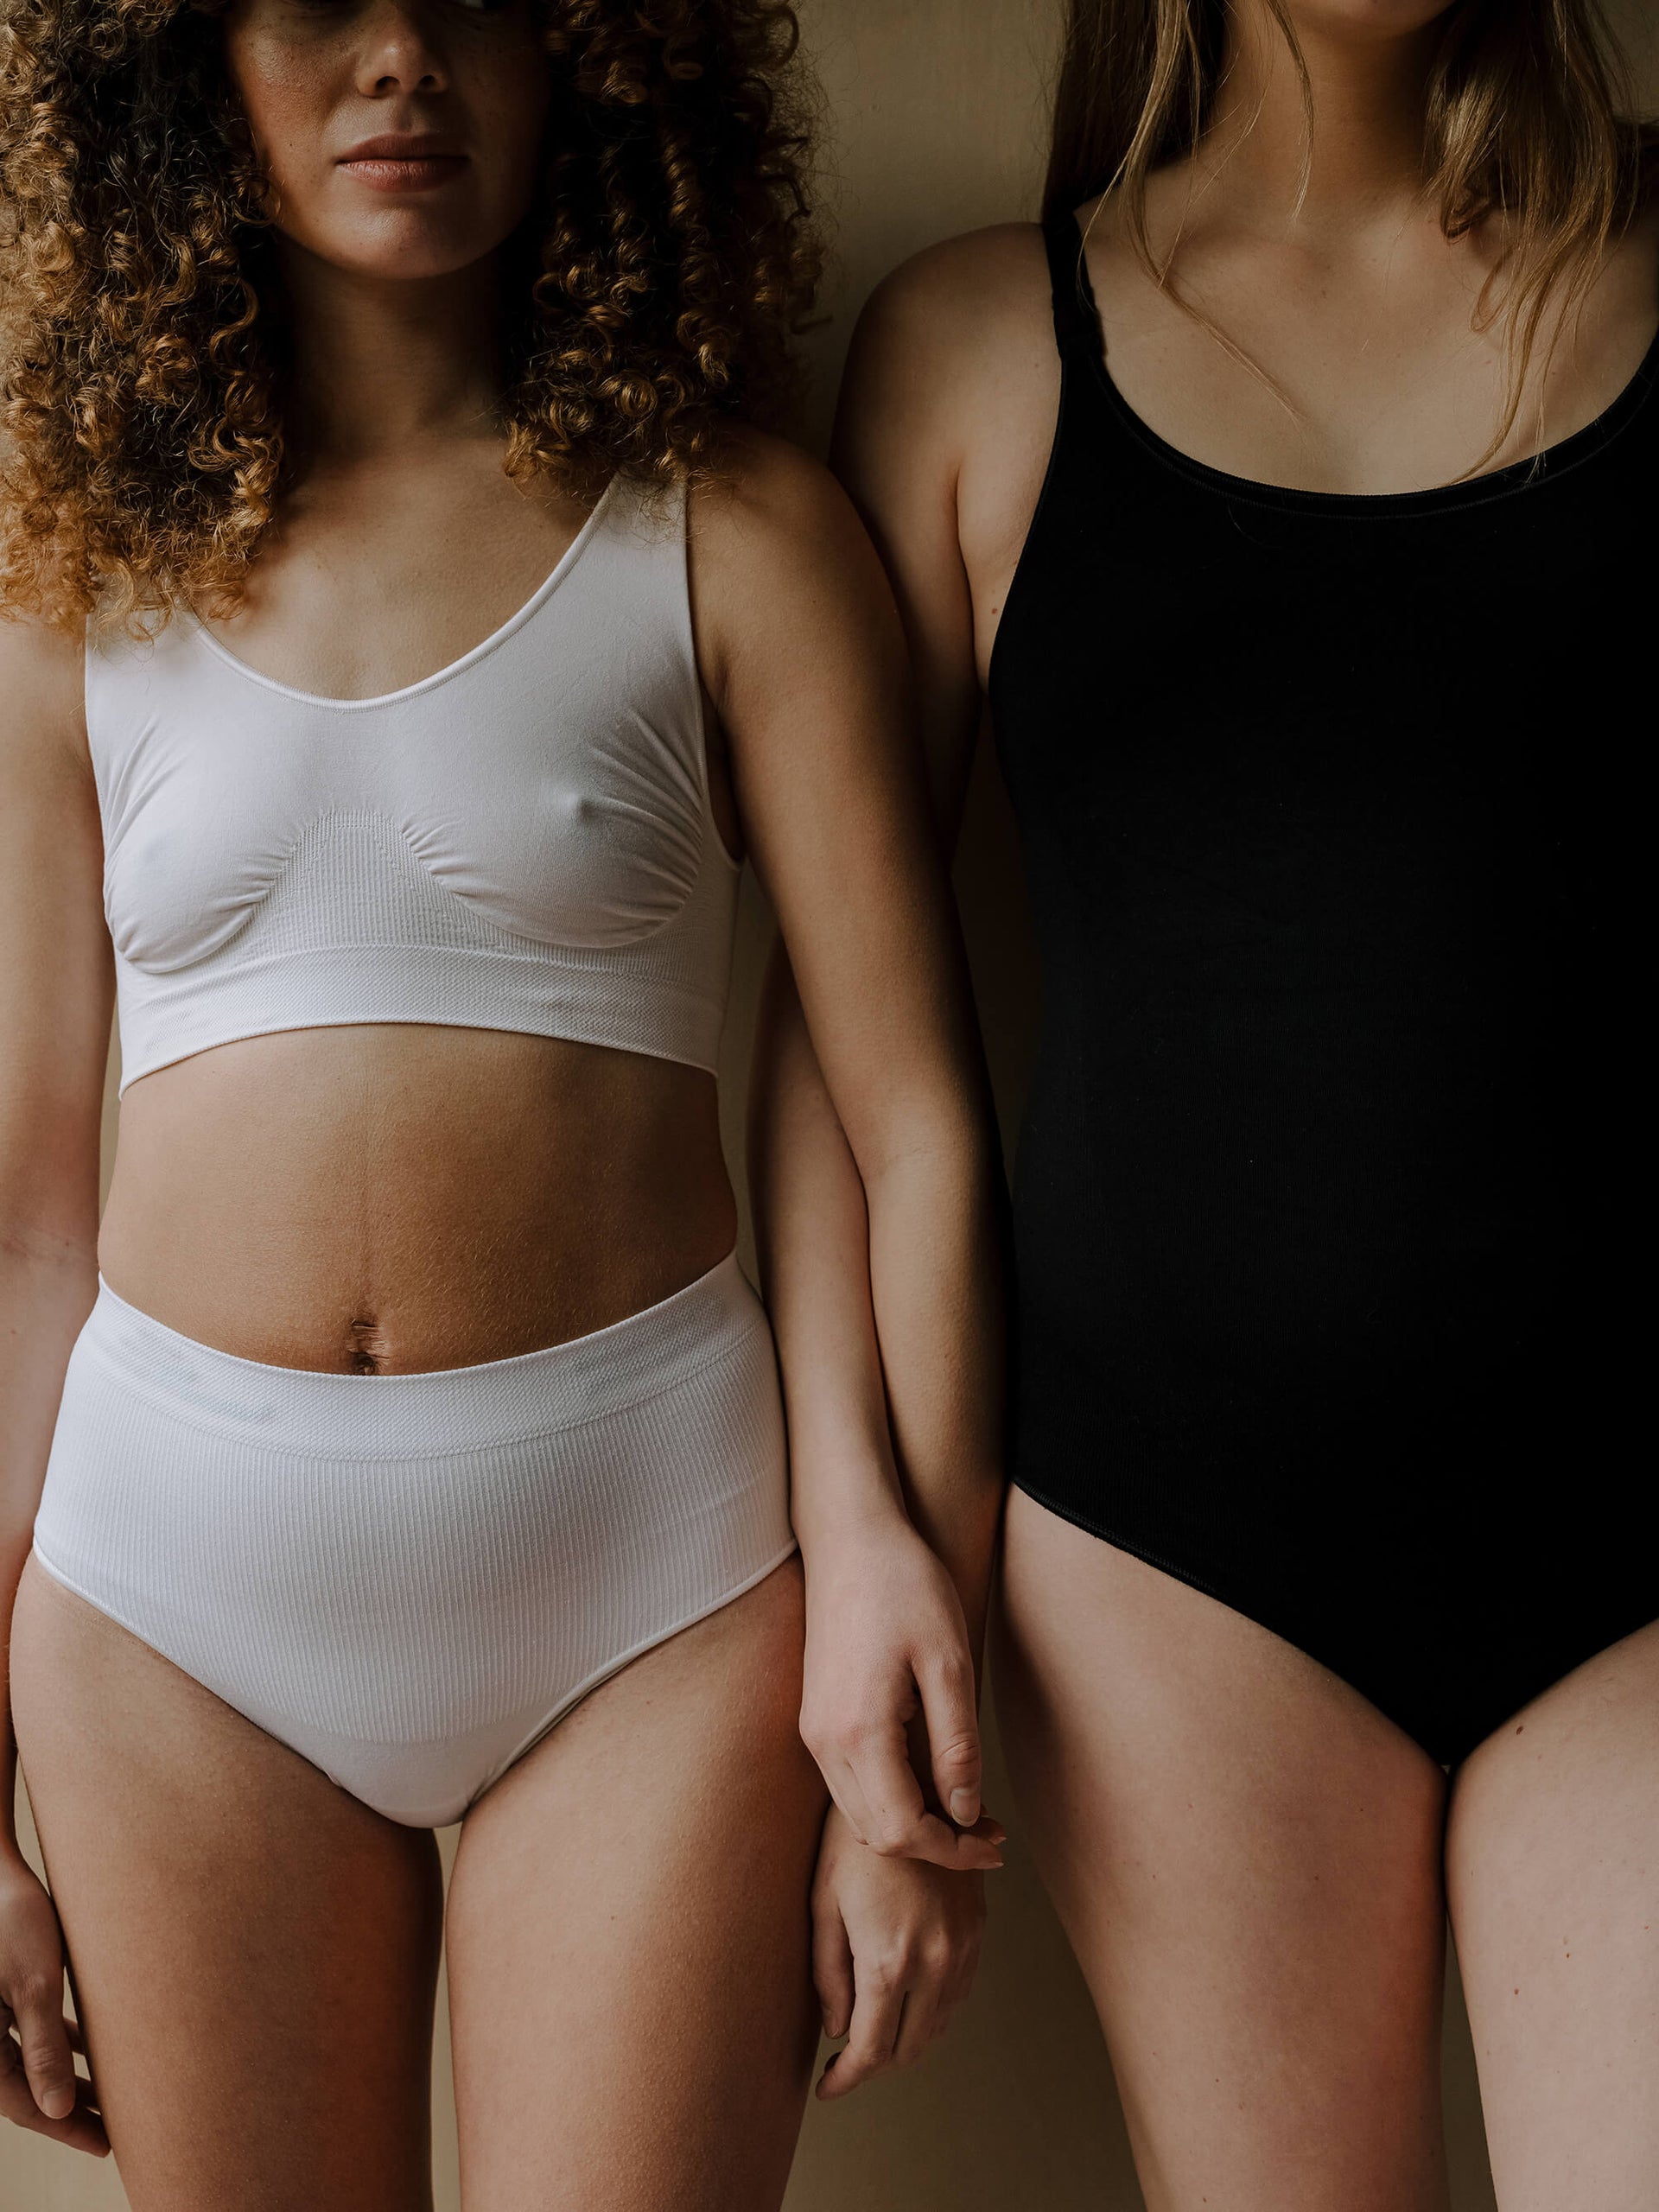 Jorgen House image of two women wearing white underwear set and black bodysuit